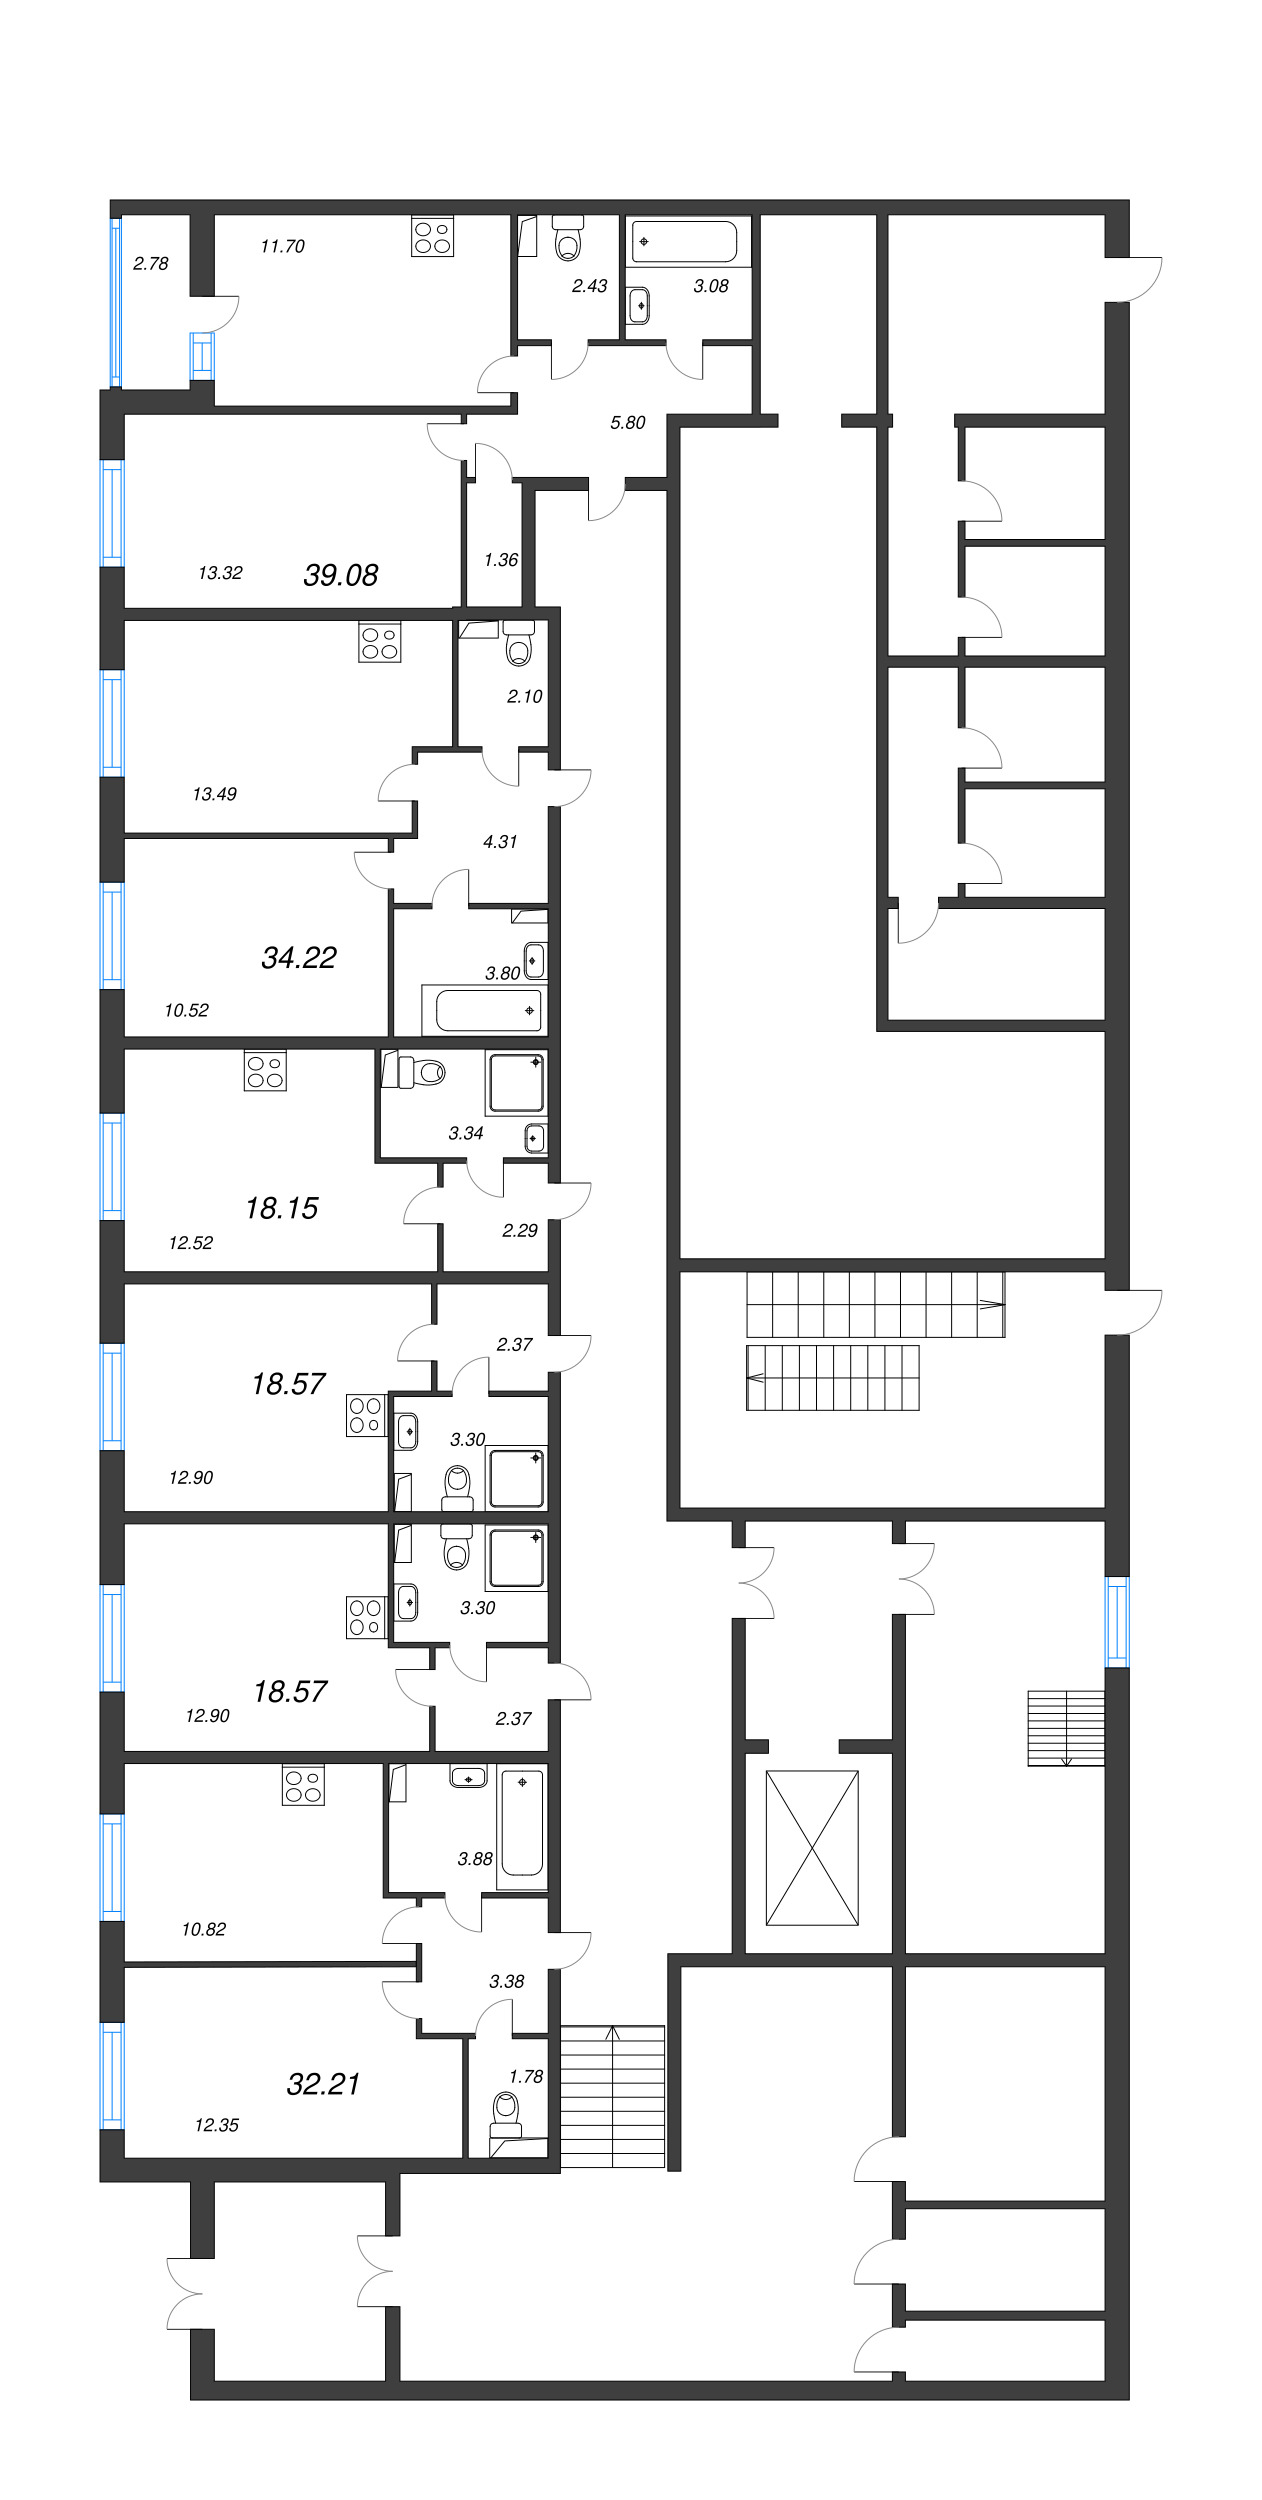 2-комнатная (Евро) квартира, 34.22 м² - планировка этажа